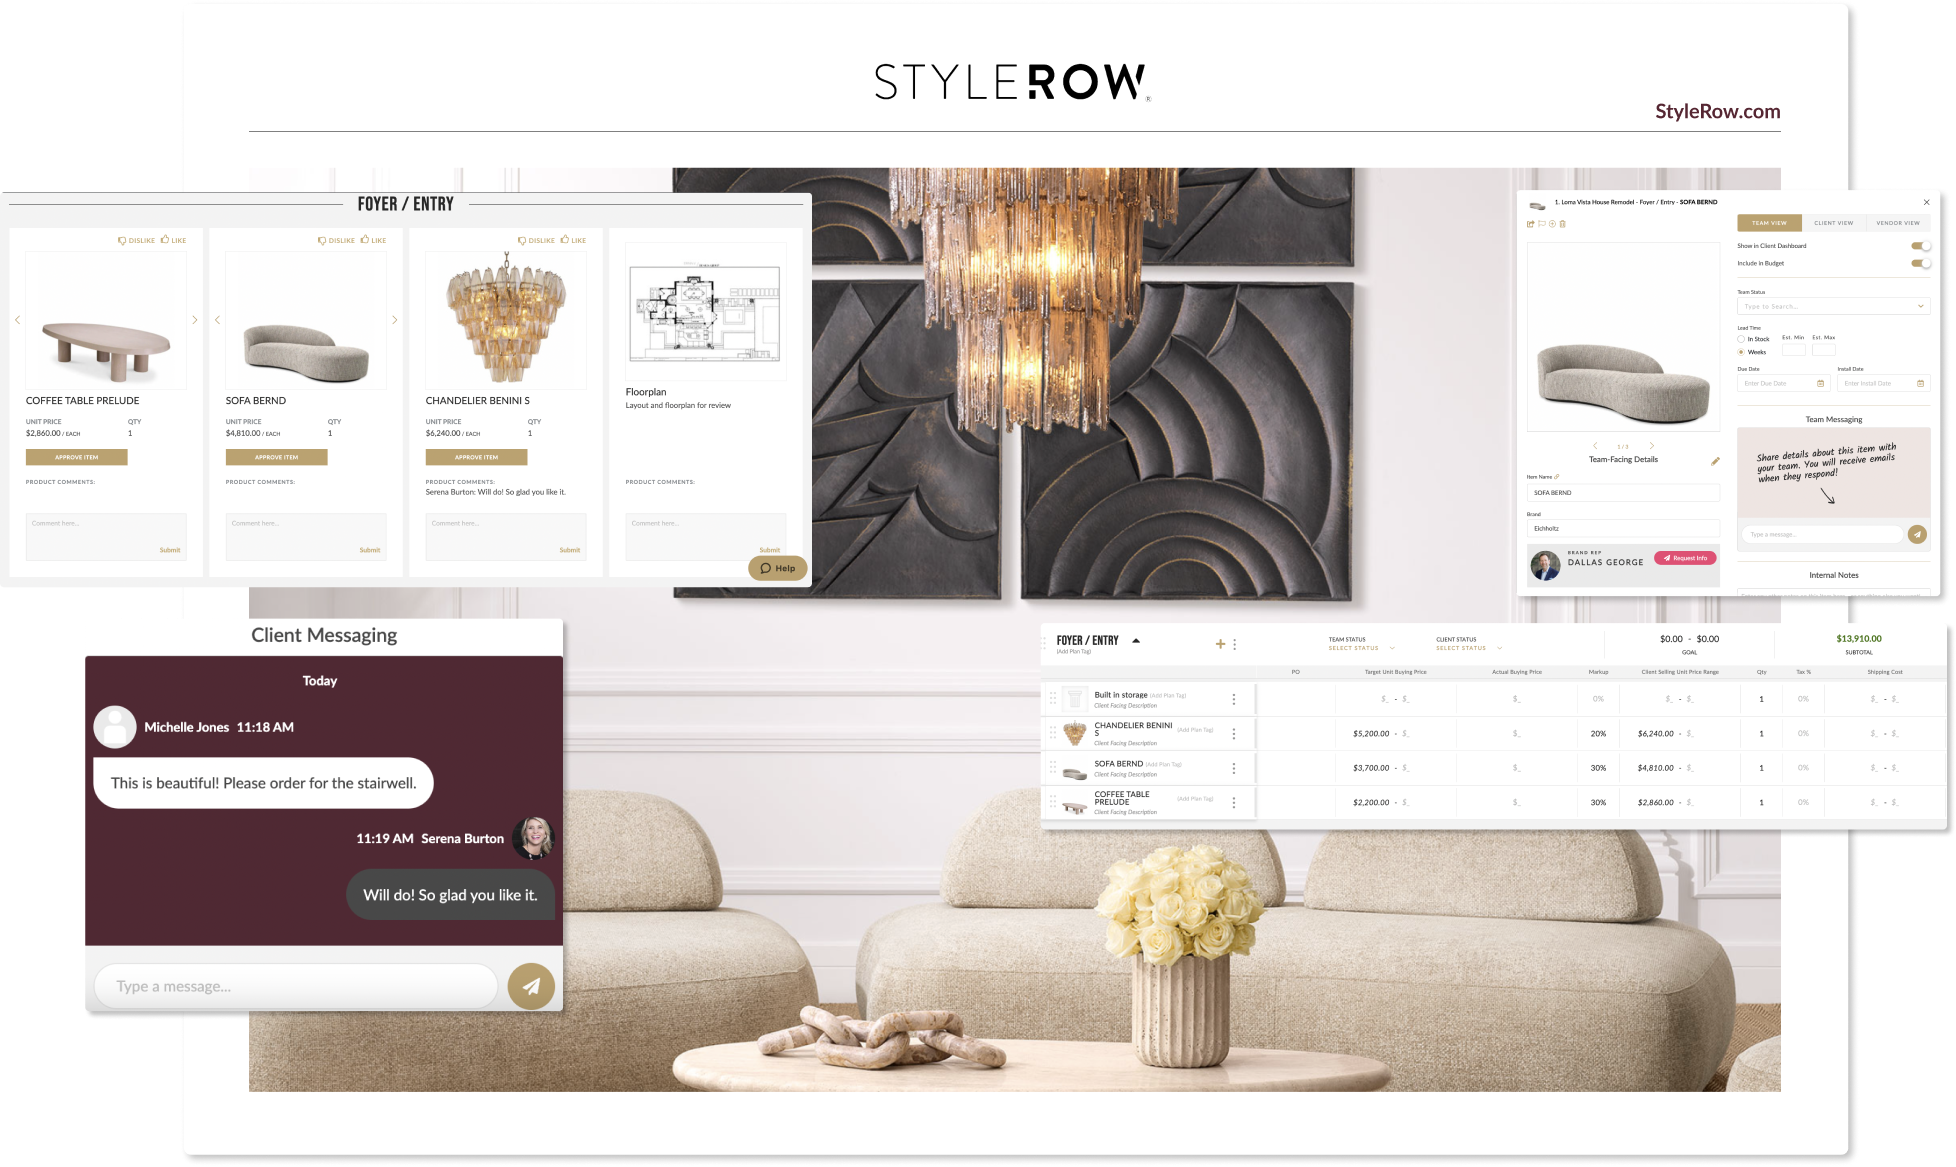 organizing platform stylerow website for interior designers. holiday shopping and organizing tips